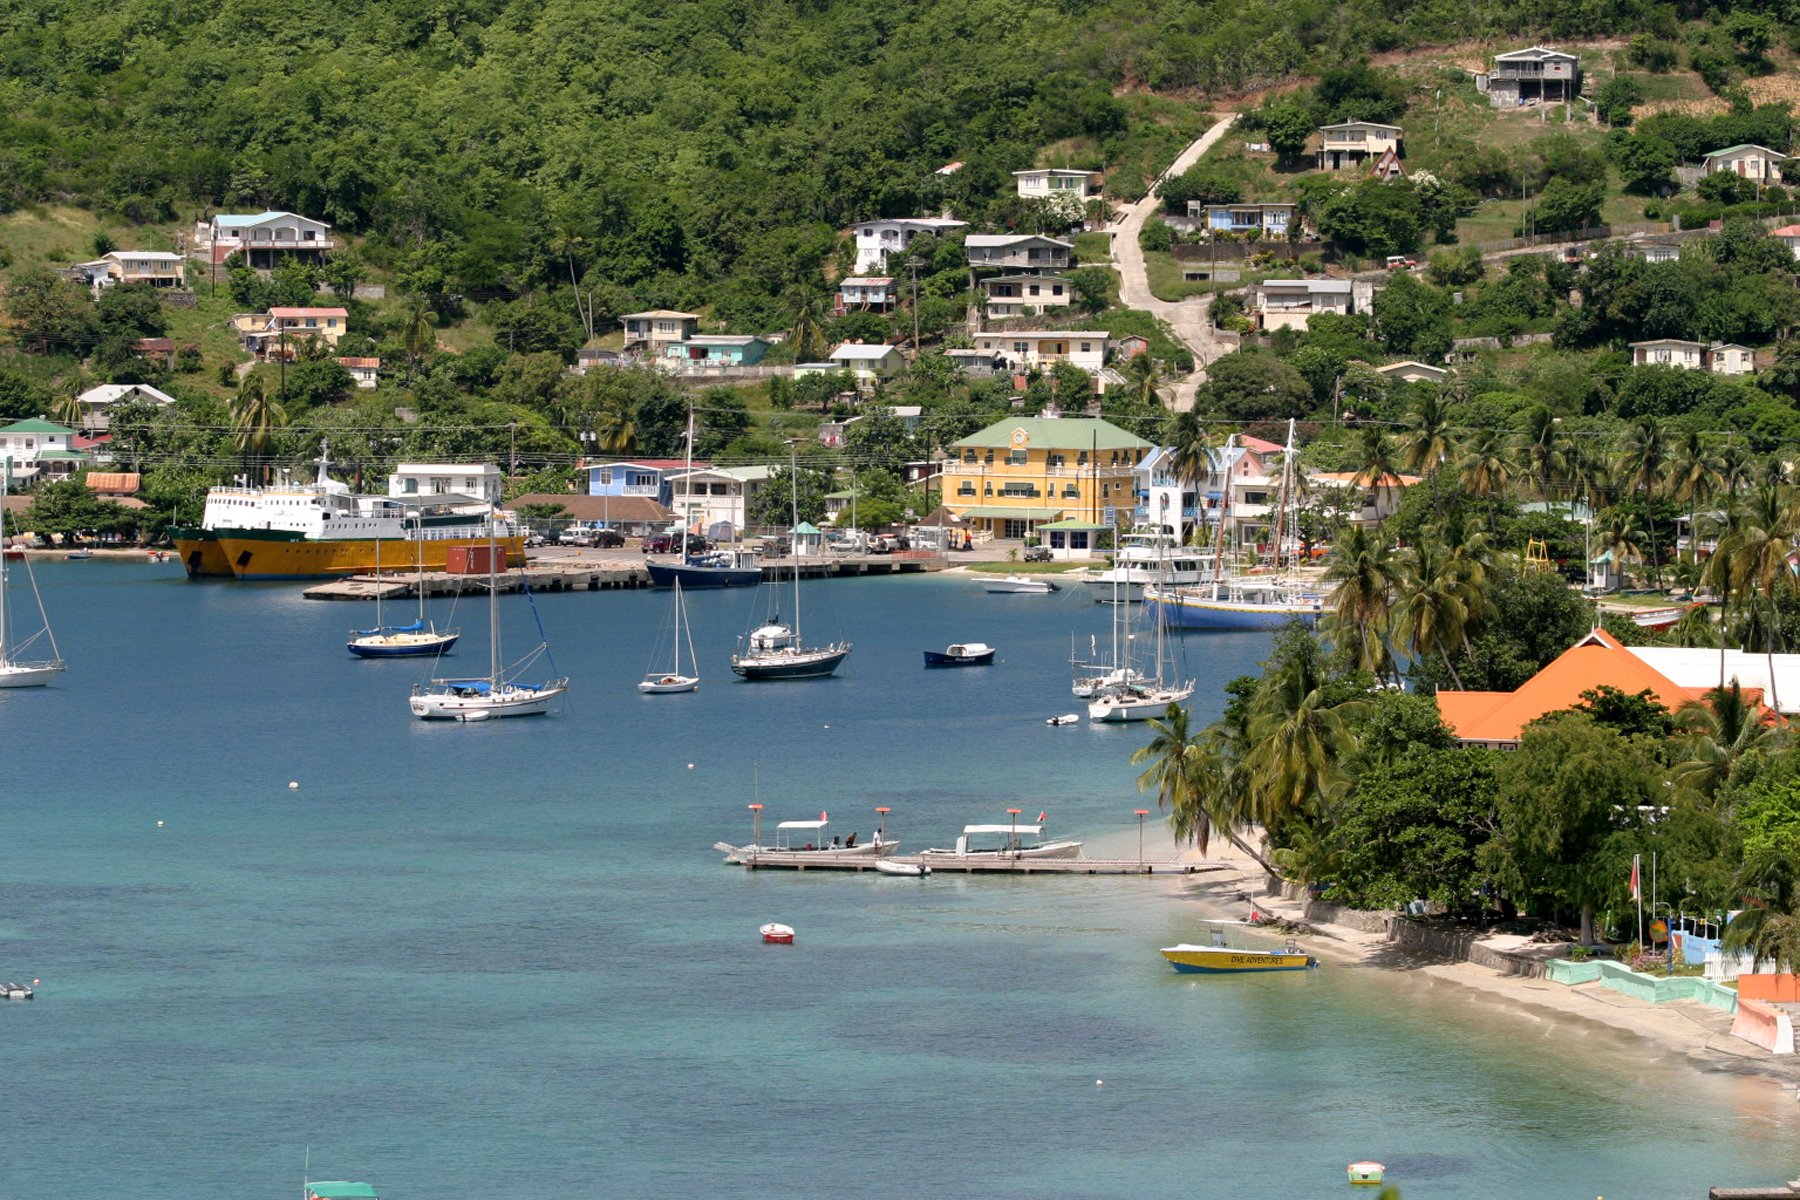 Image courtesy of St. Vincent & the Grenadines Tourist Office/Chris Caldicott 